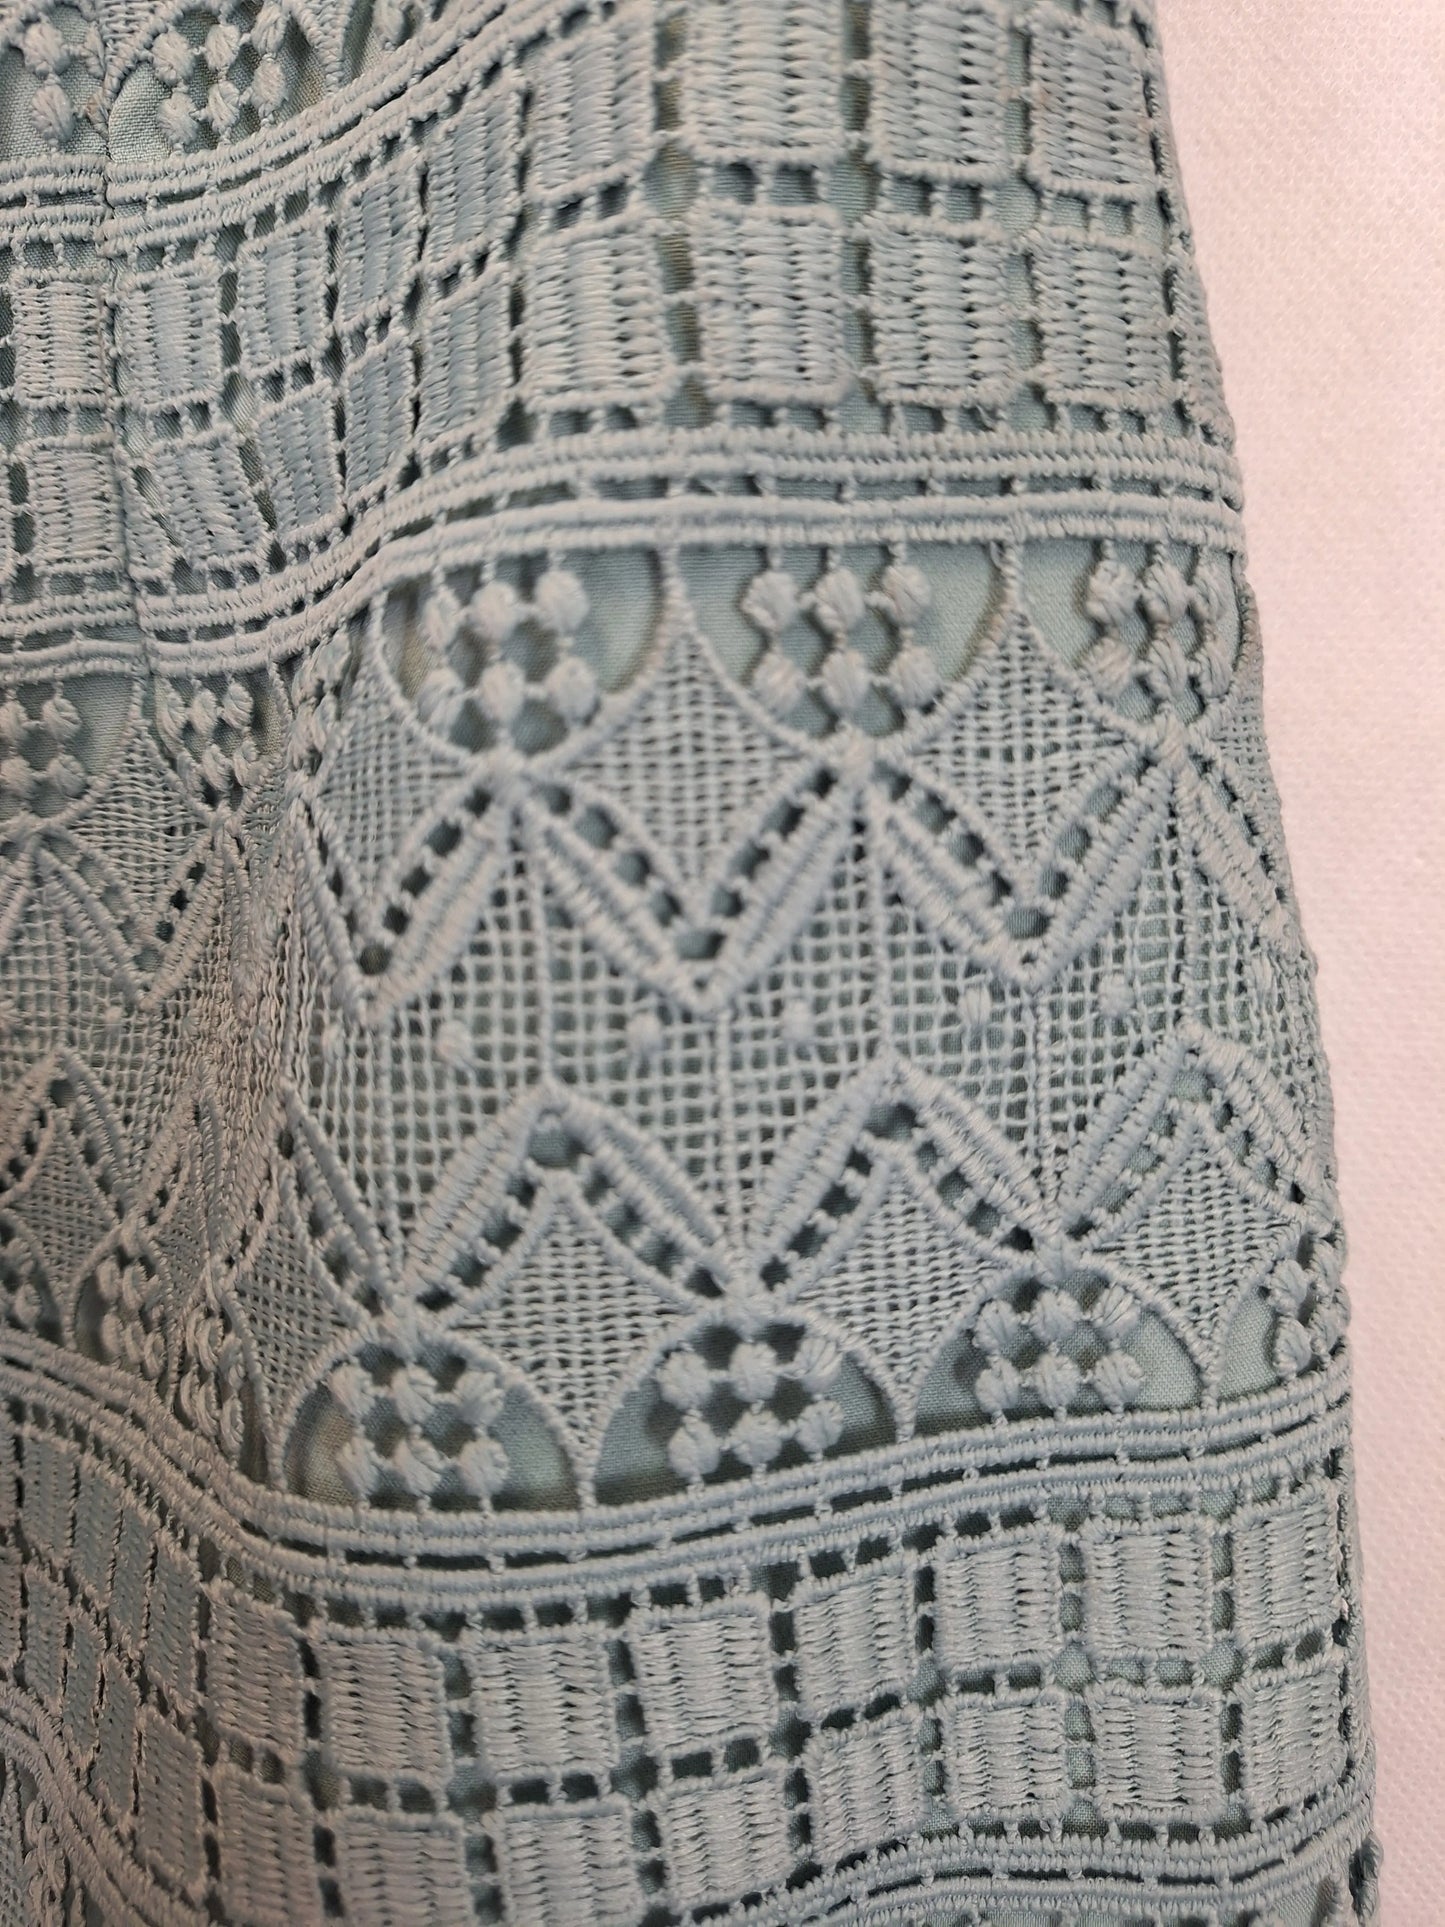 Kookai Pastel Mesh Midi Skirt Size 12 by SwapUp-Online Second Hand Store-Online Thrift Store